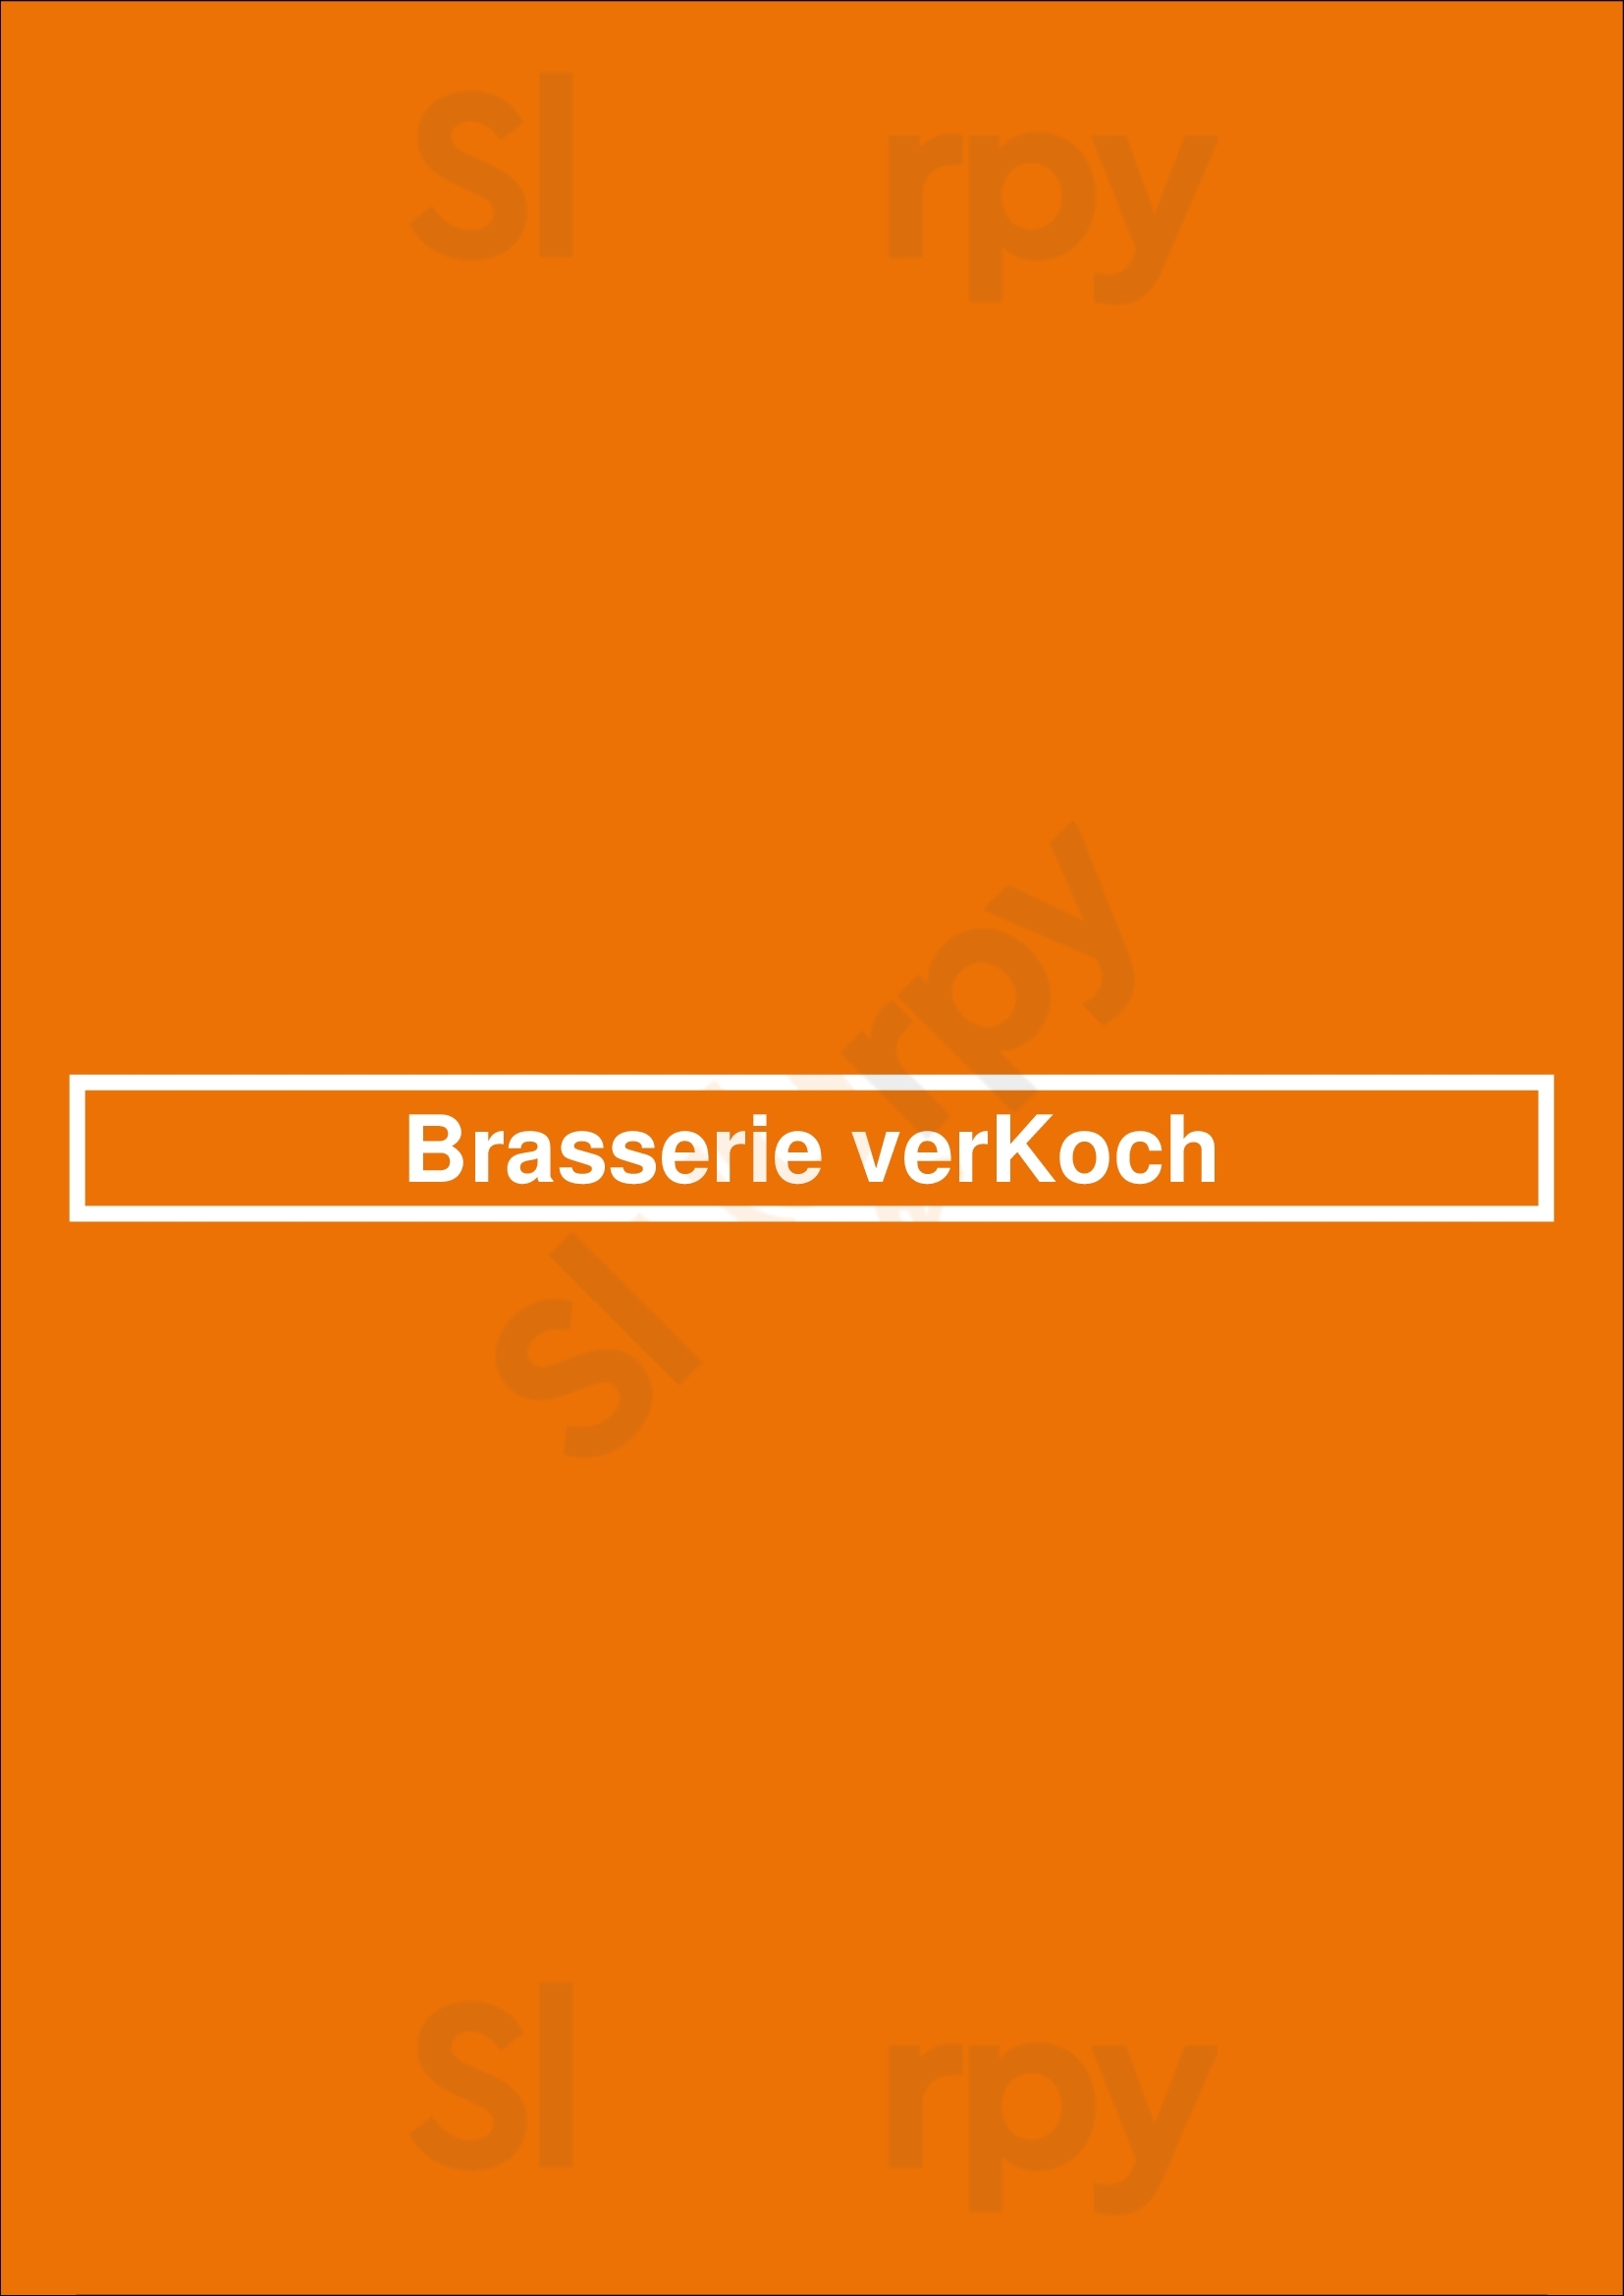 Brasserie Verkoch Roermond Menu - 1